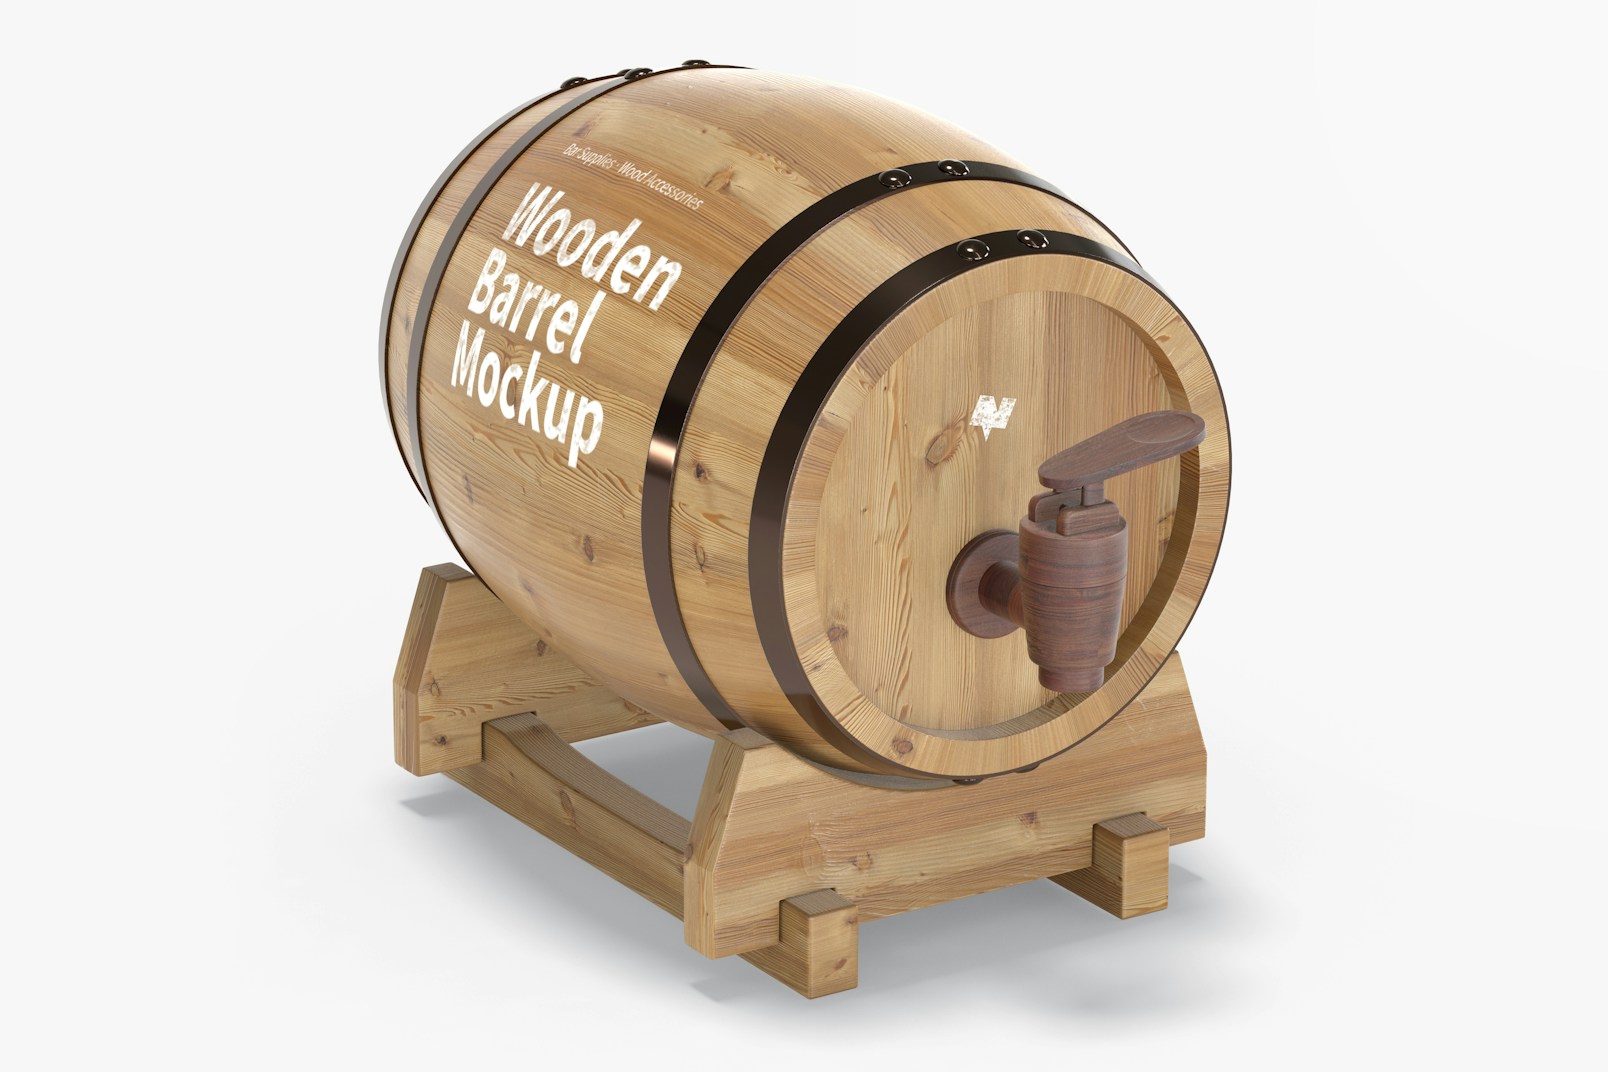 Wooden Barrel on Stand Mockup